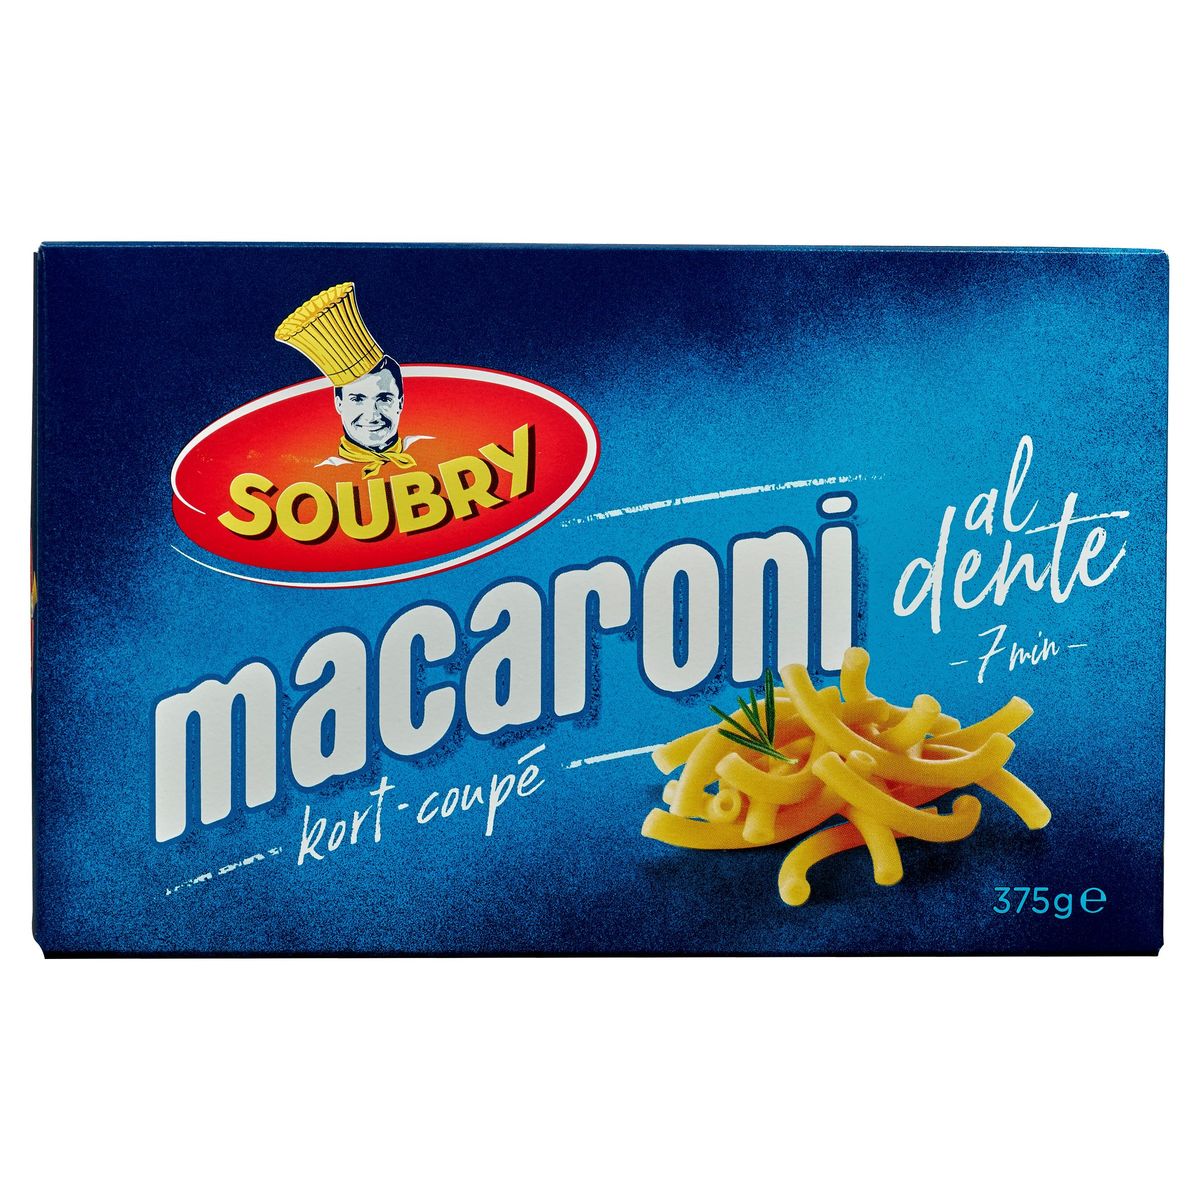 Soubry Pasta Macaroni kort 375g